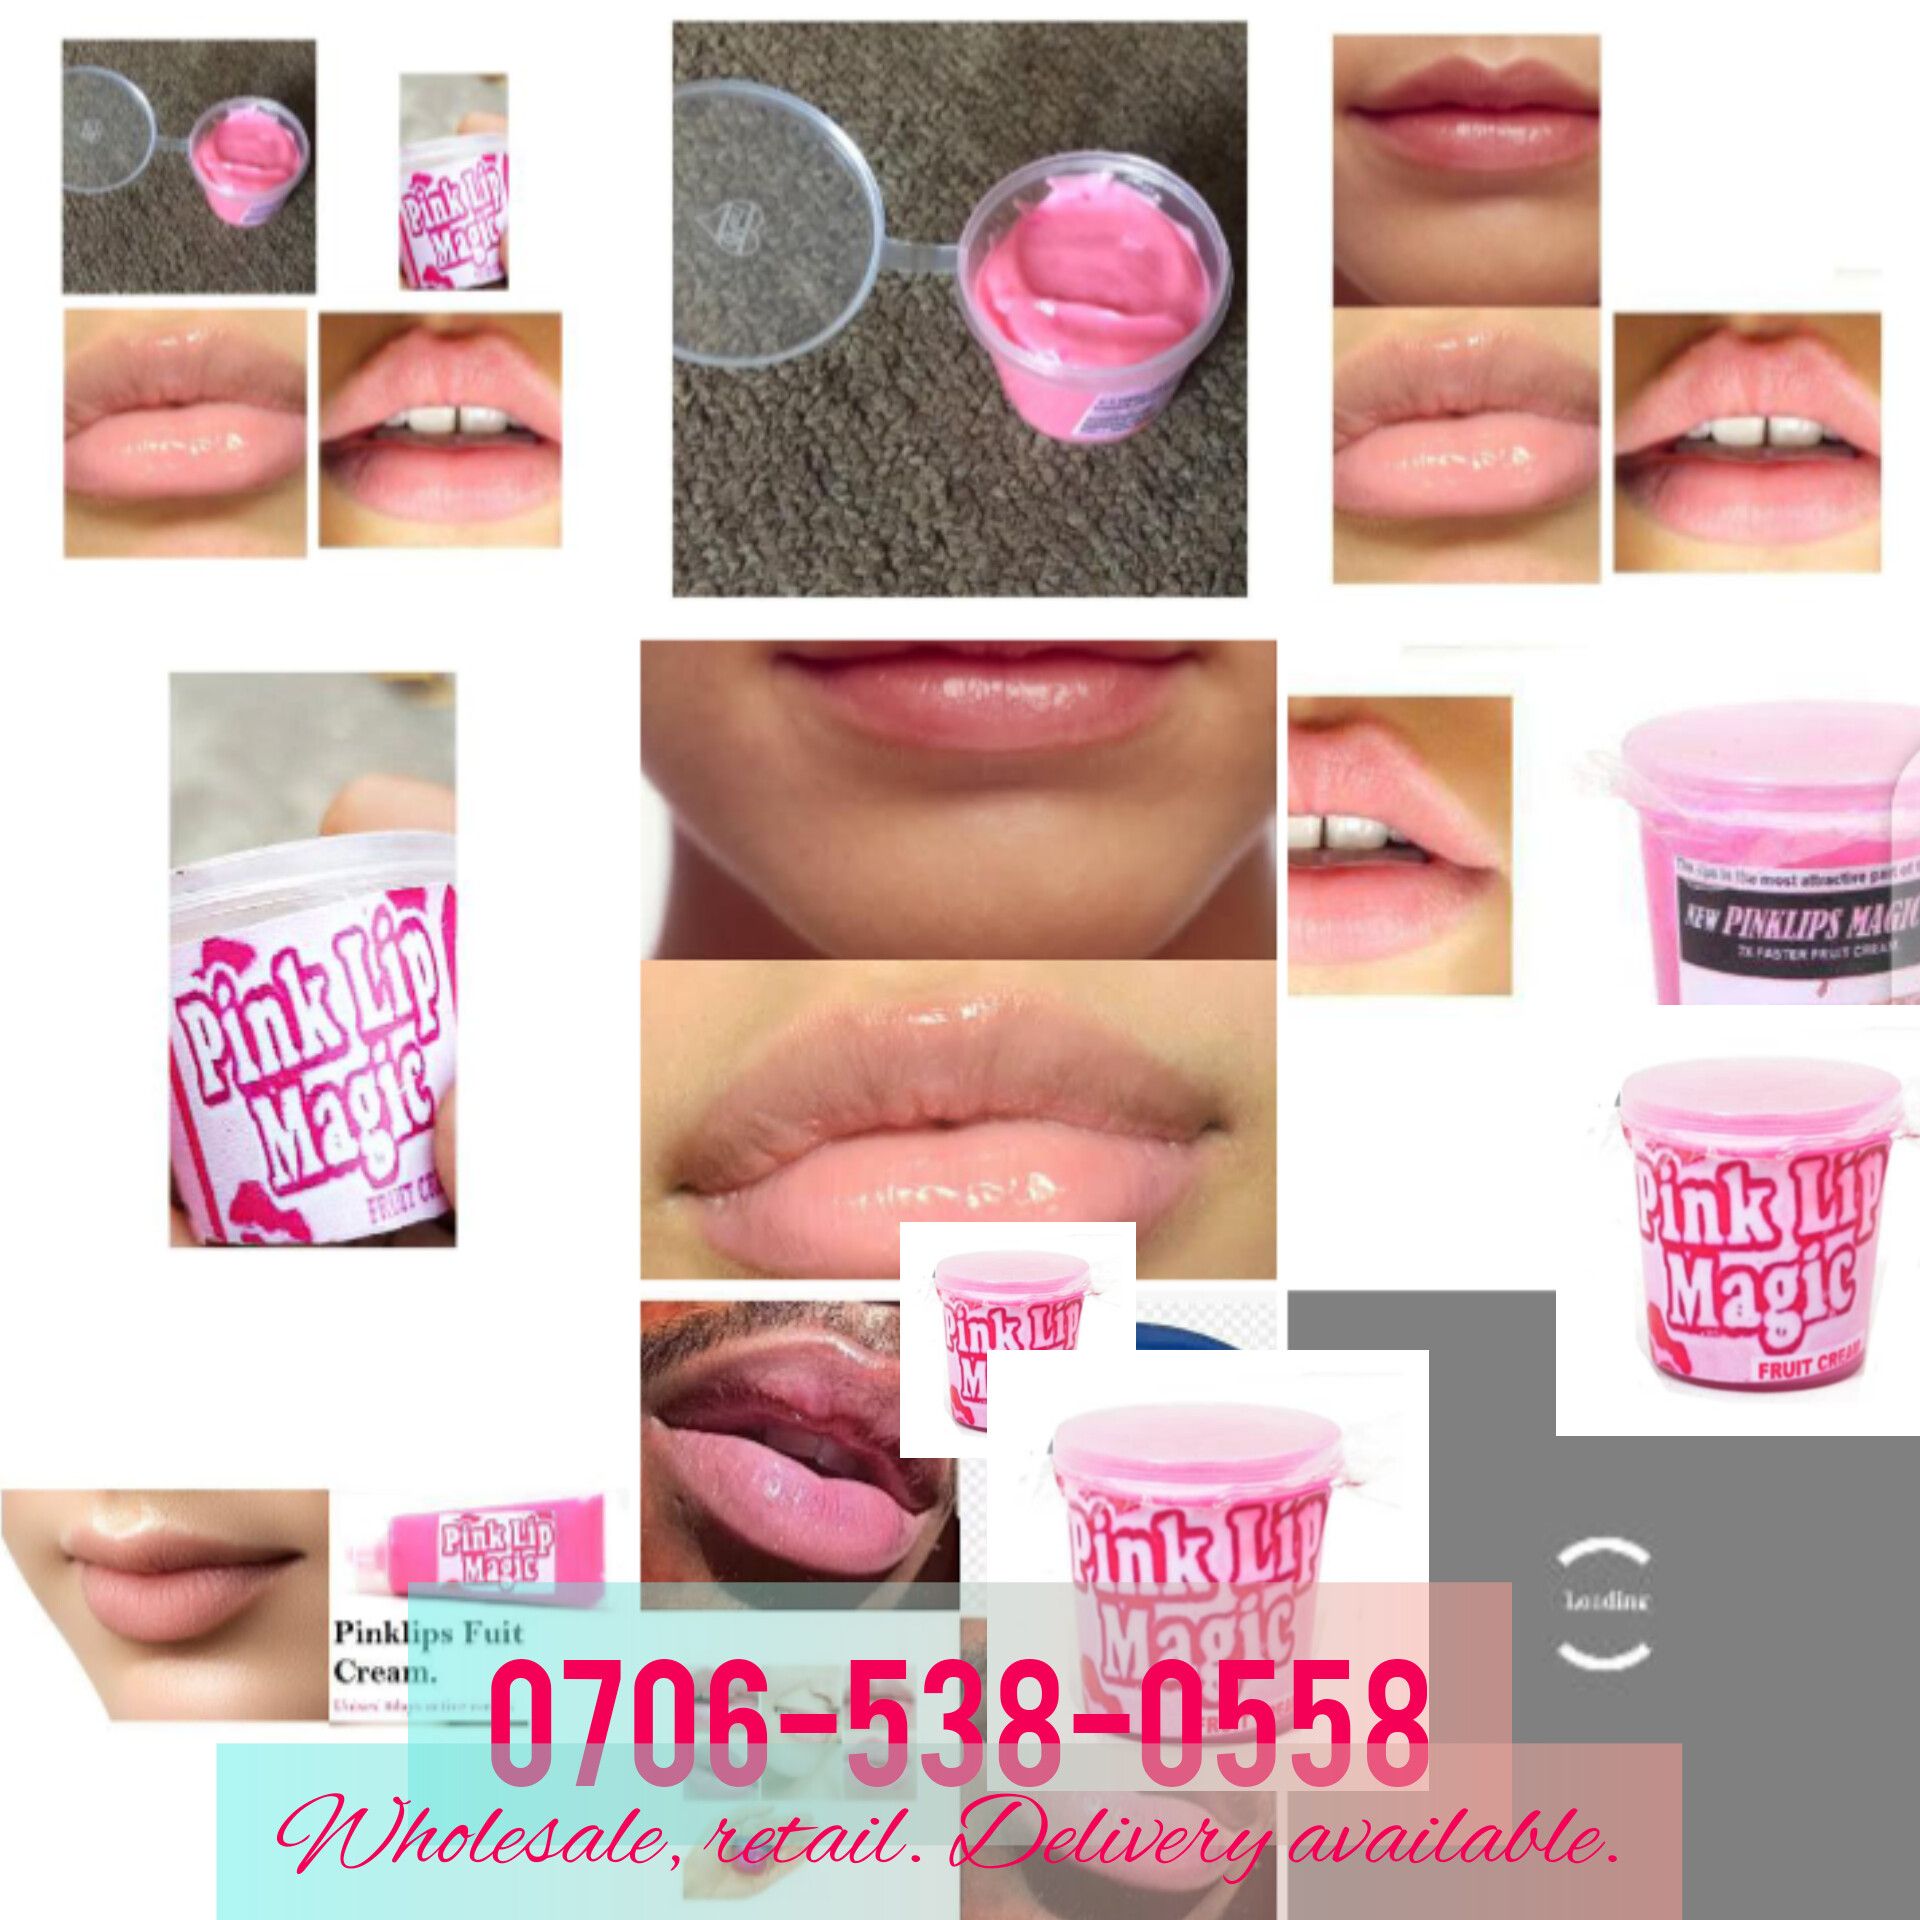 Pink lips magic cream